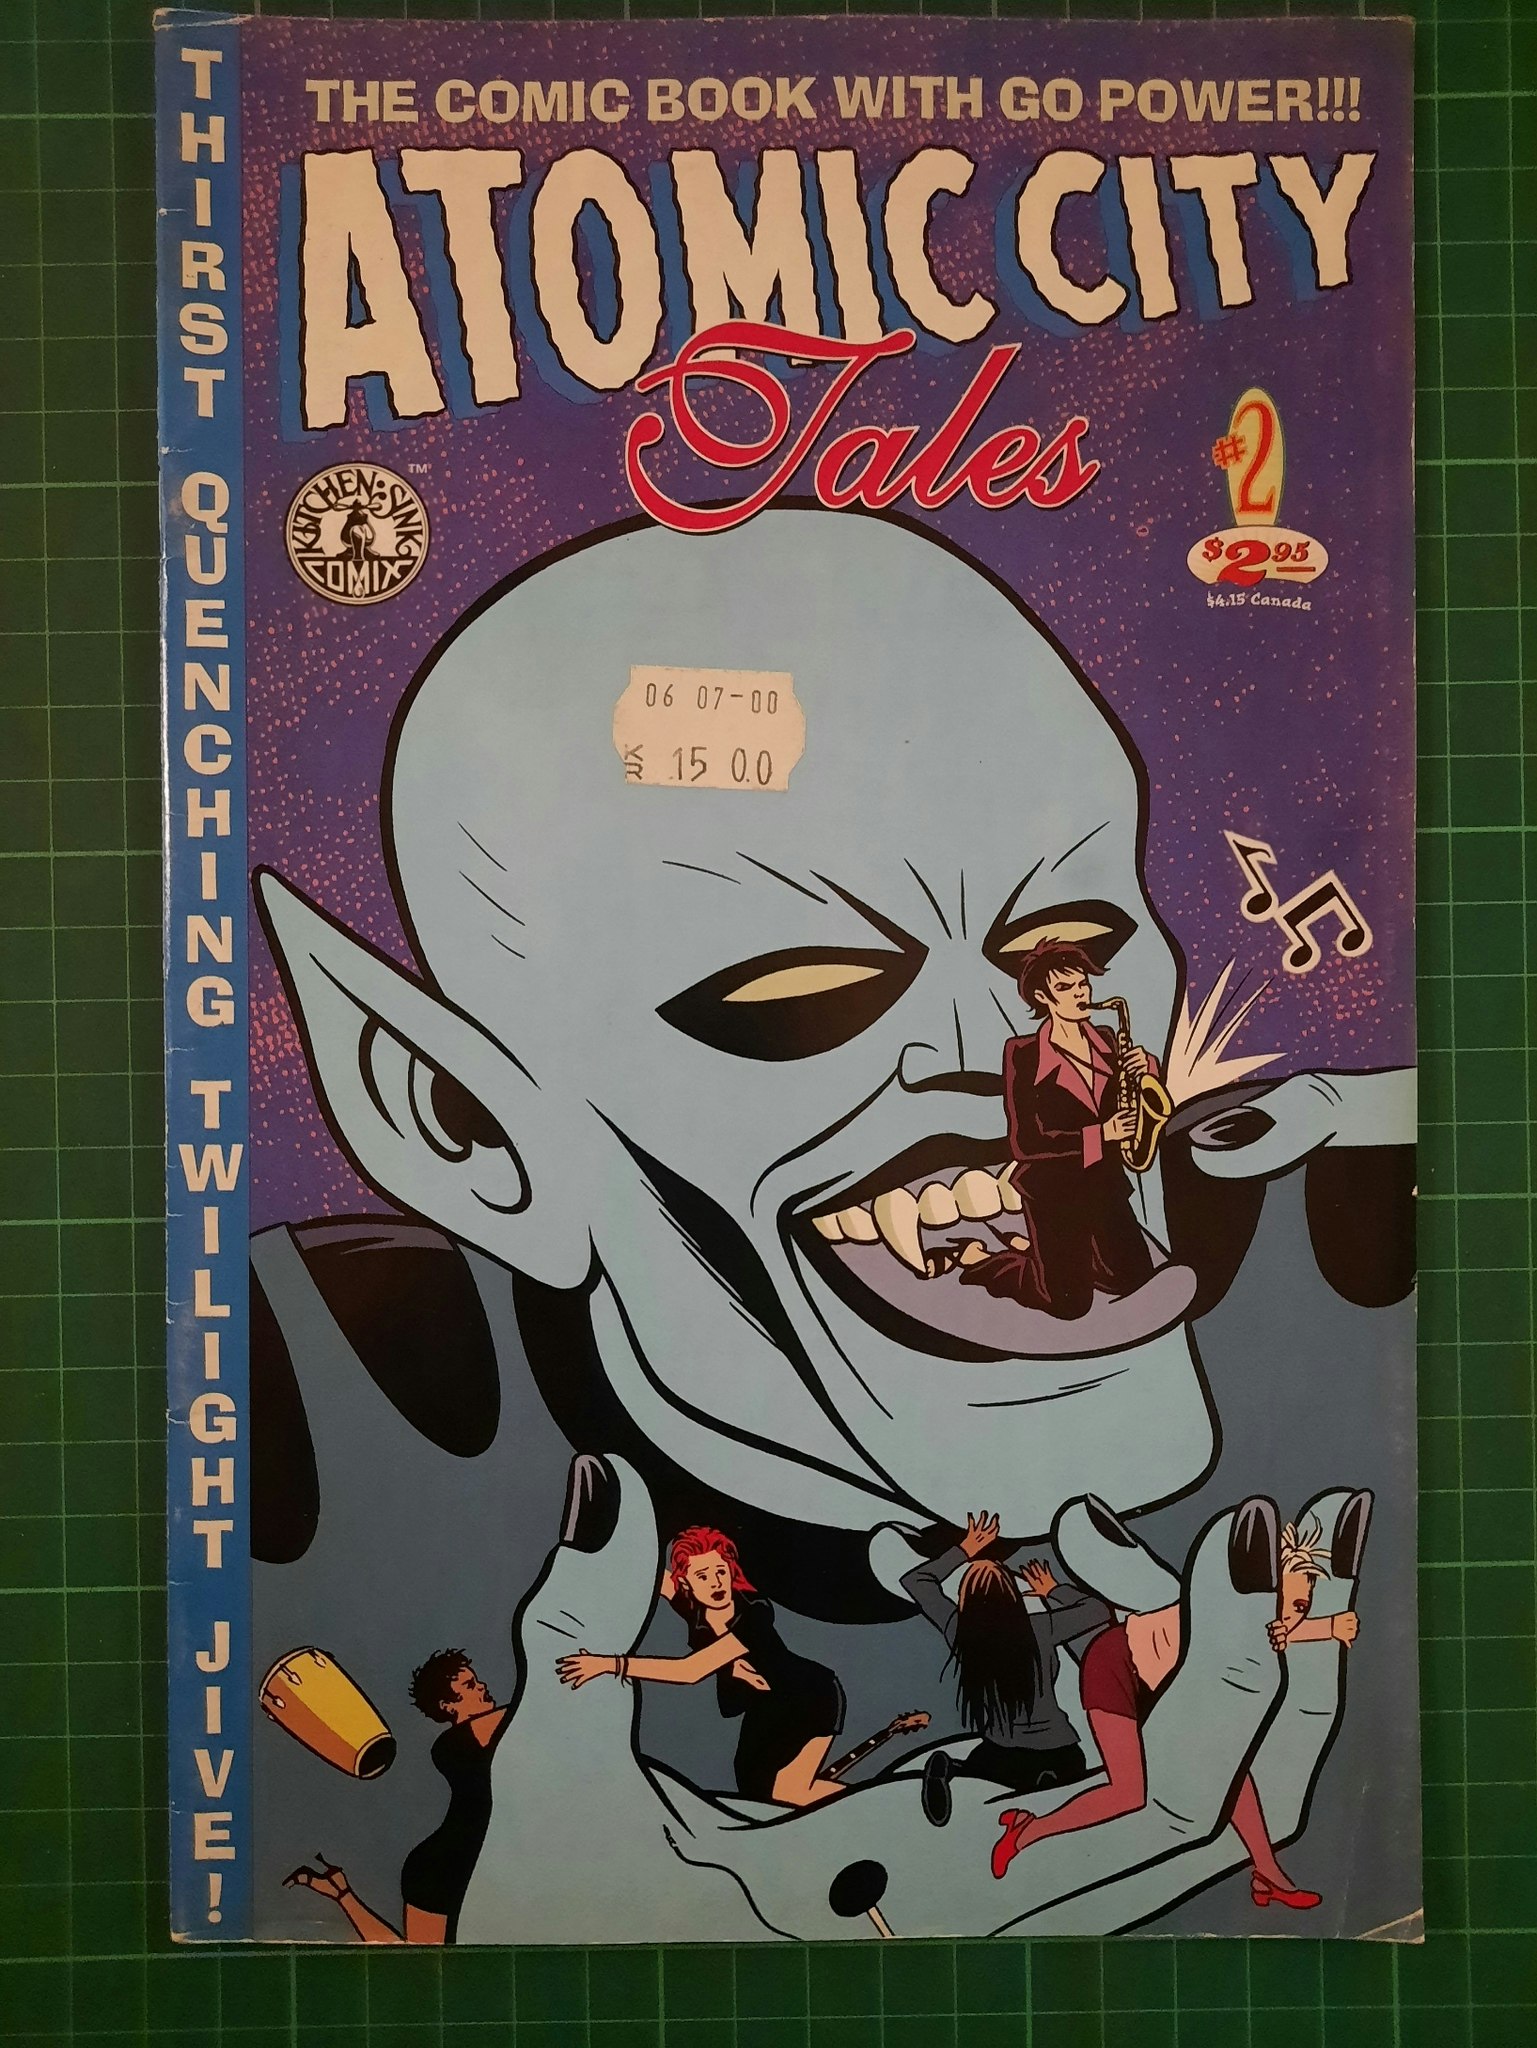 Atomic City tales  #2